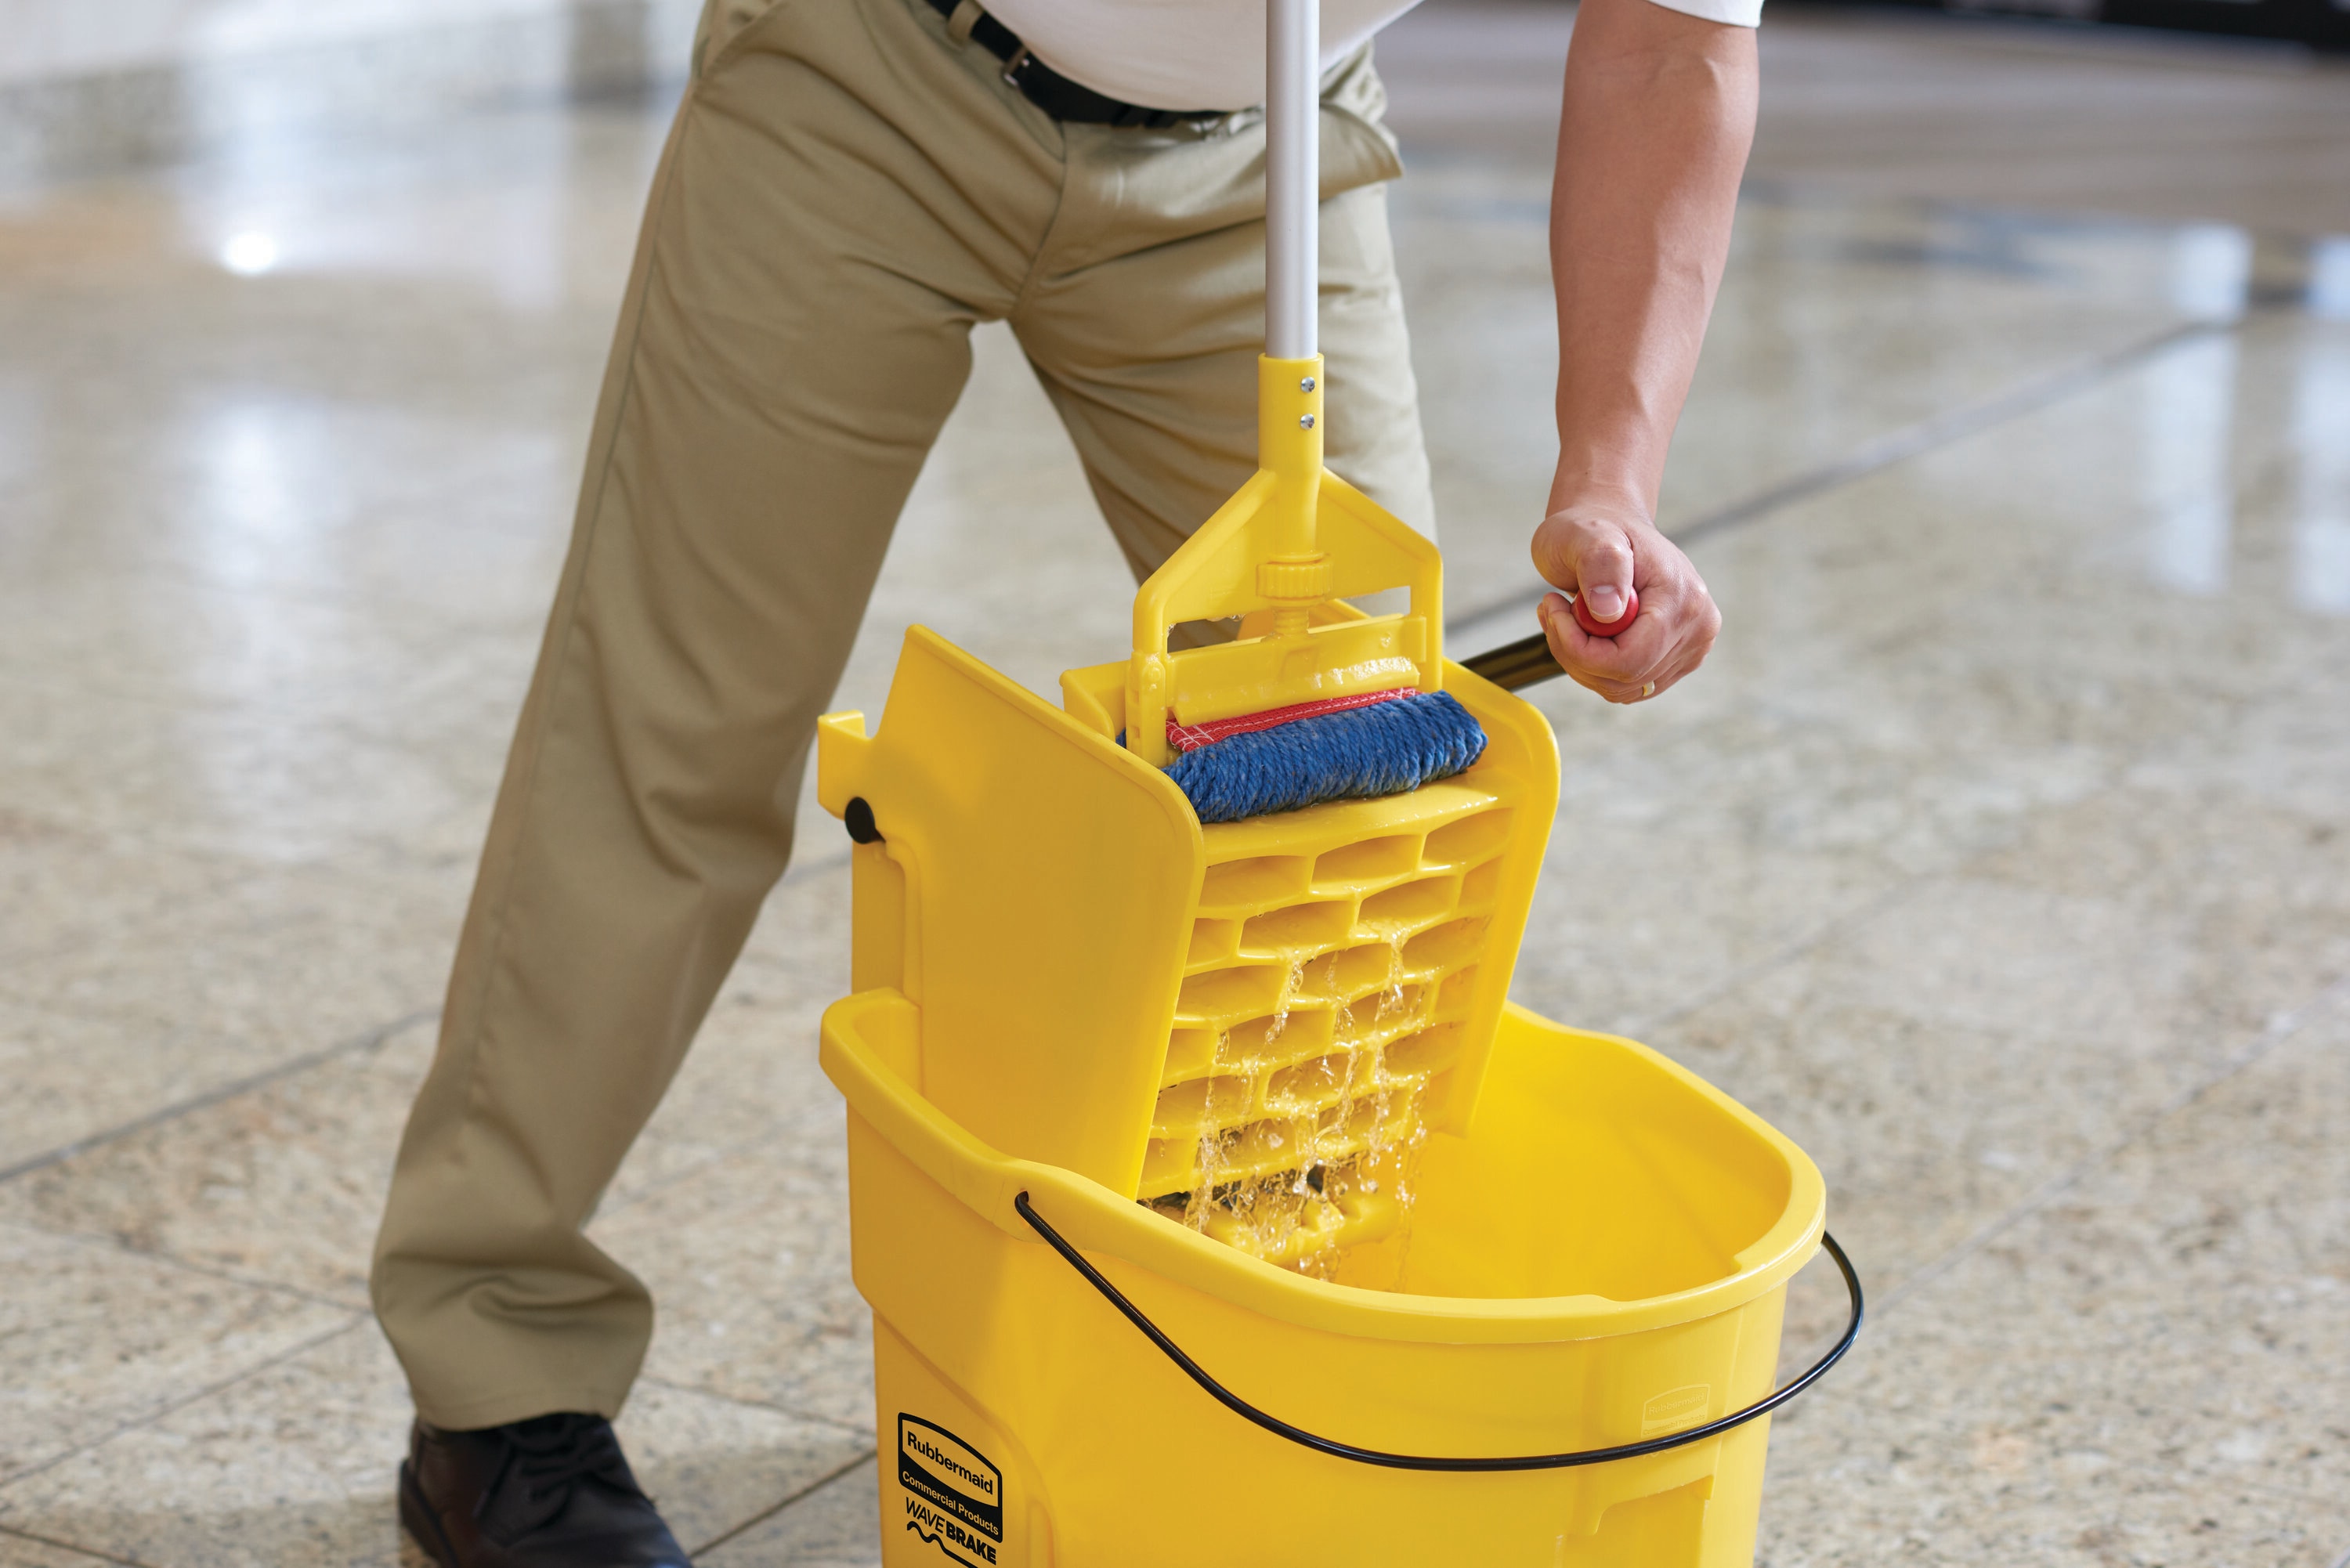 Mind Reader 20 Liter Heavy Duty Mop Wringer Trolley Bucket, Yellow